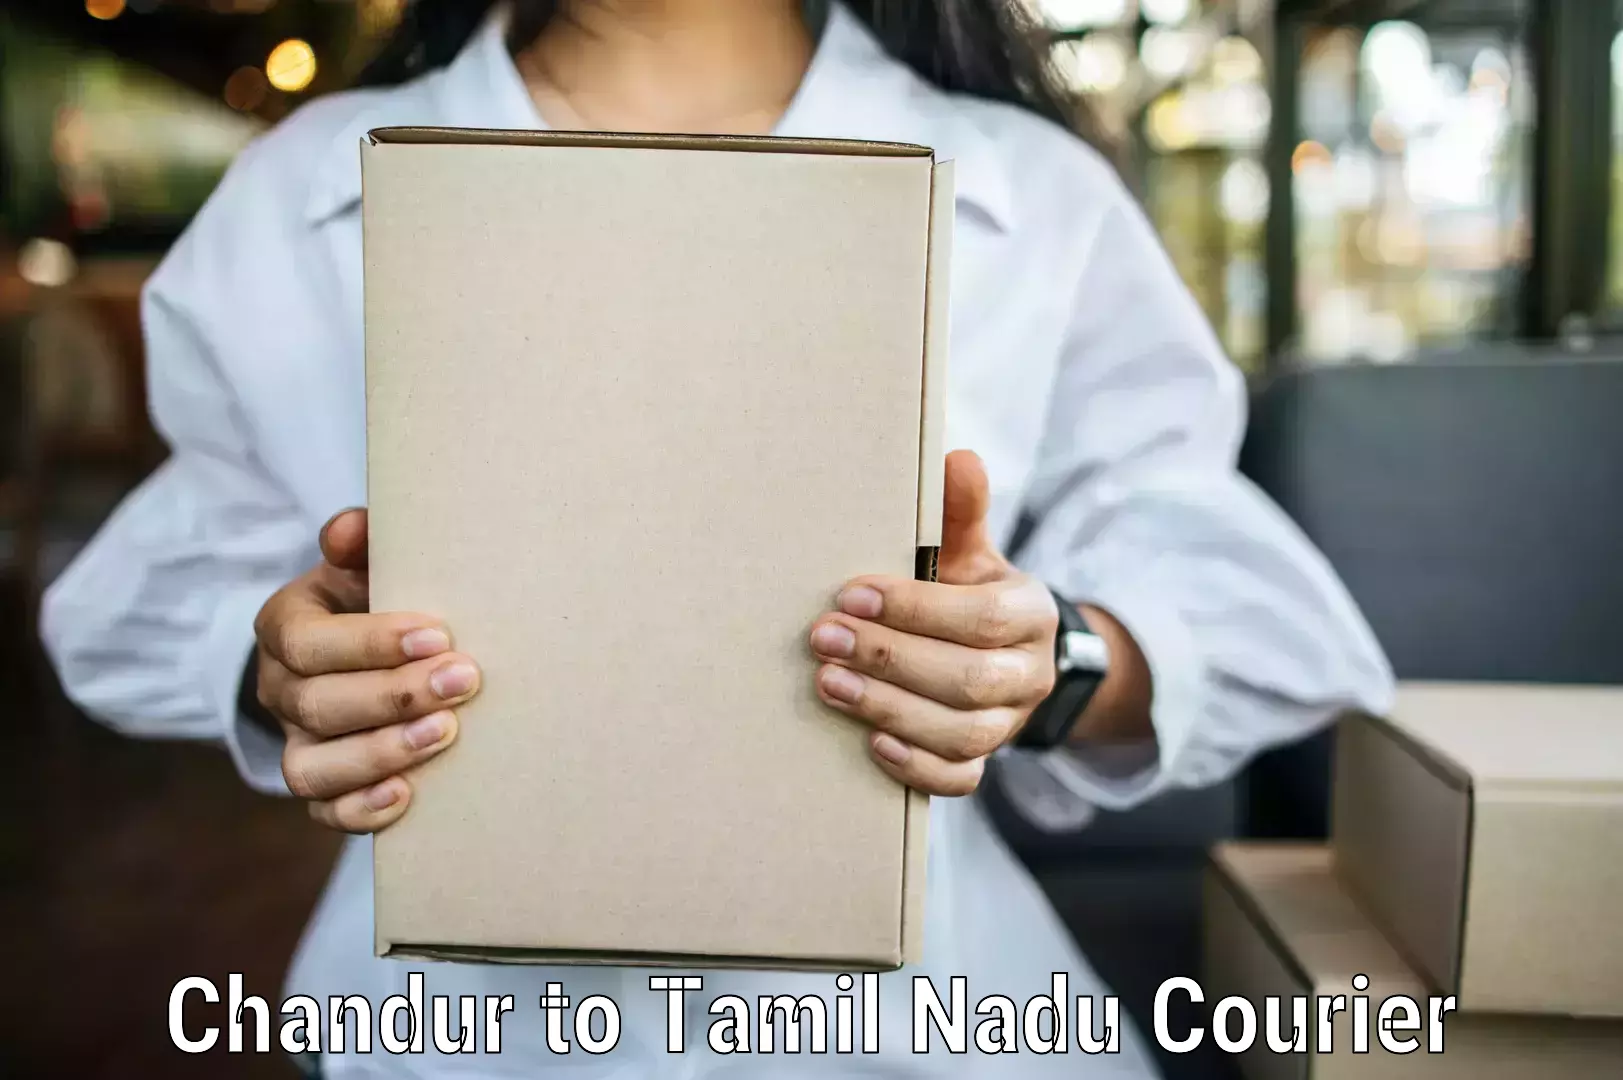 Reliable courier service Chandur to Madurai